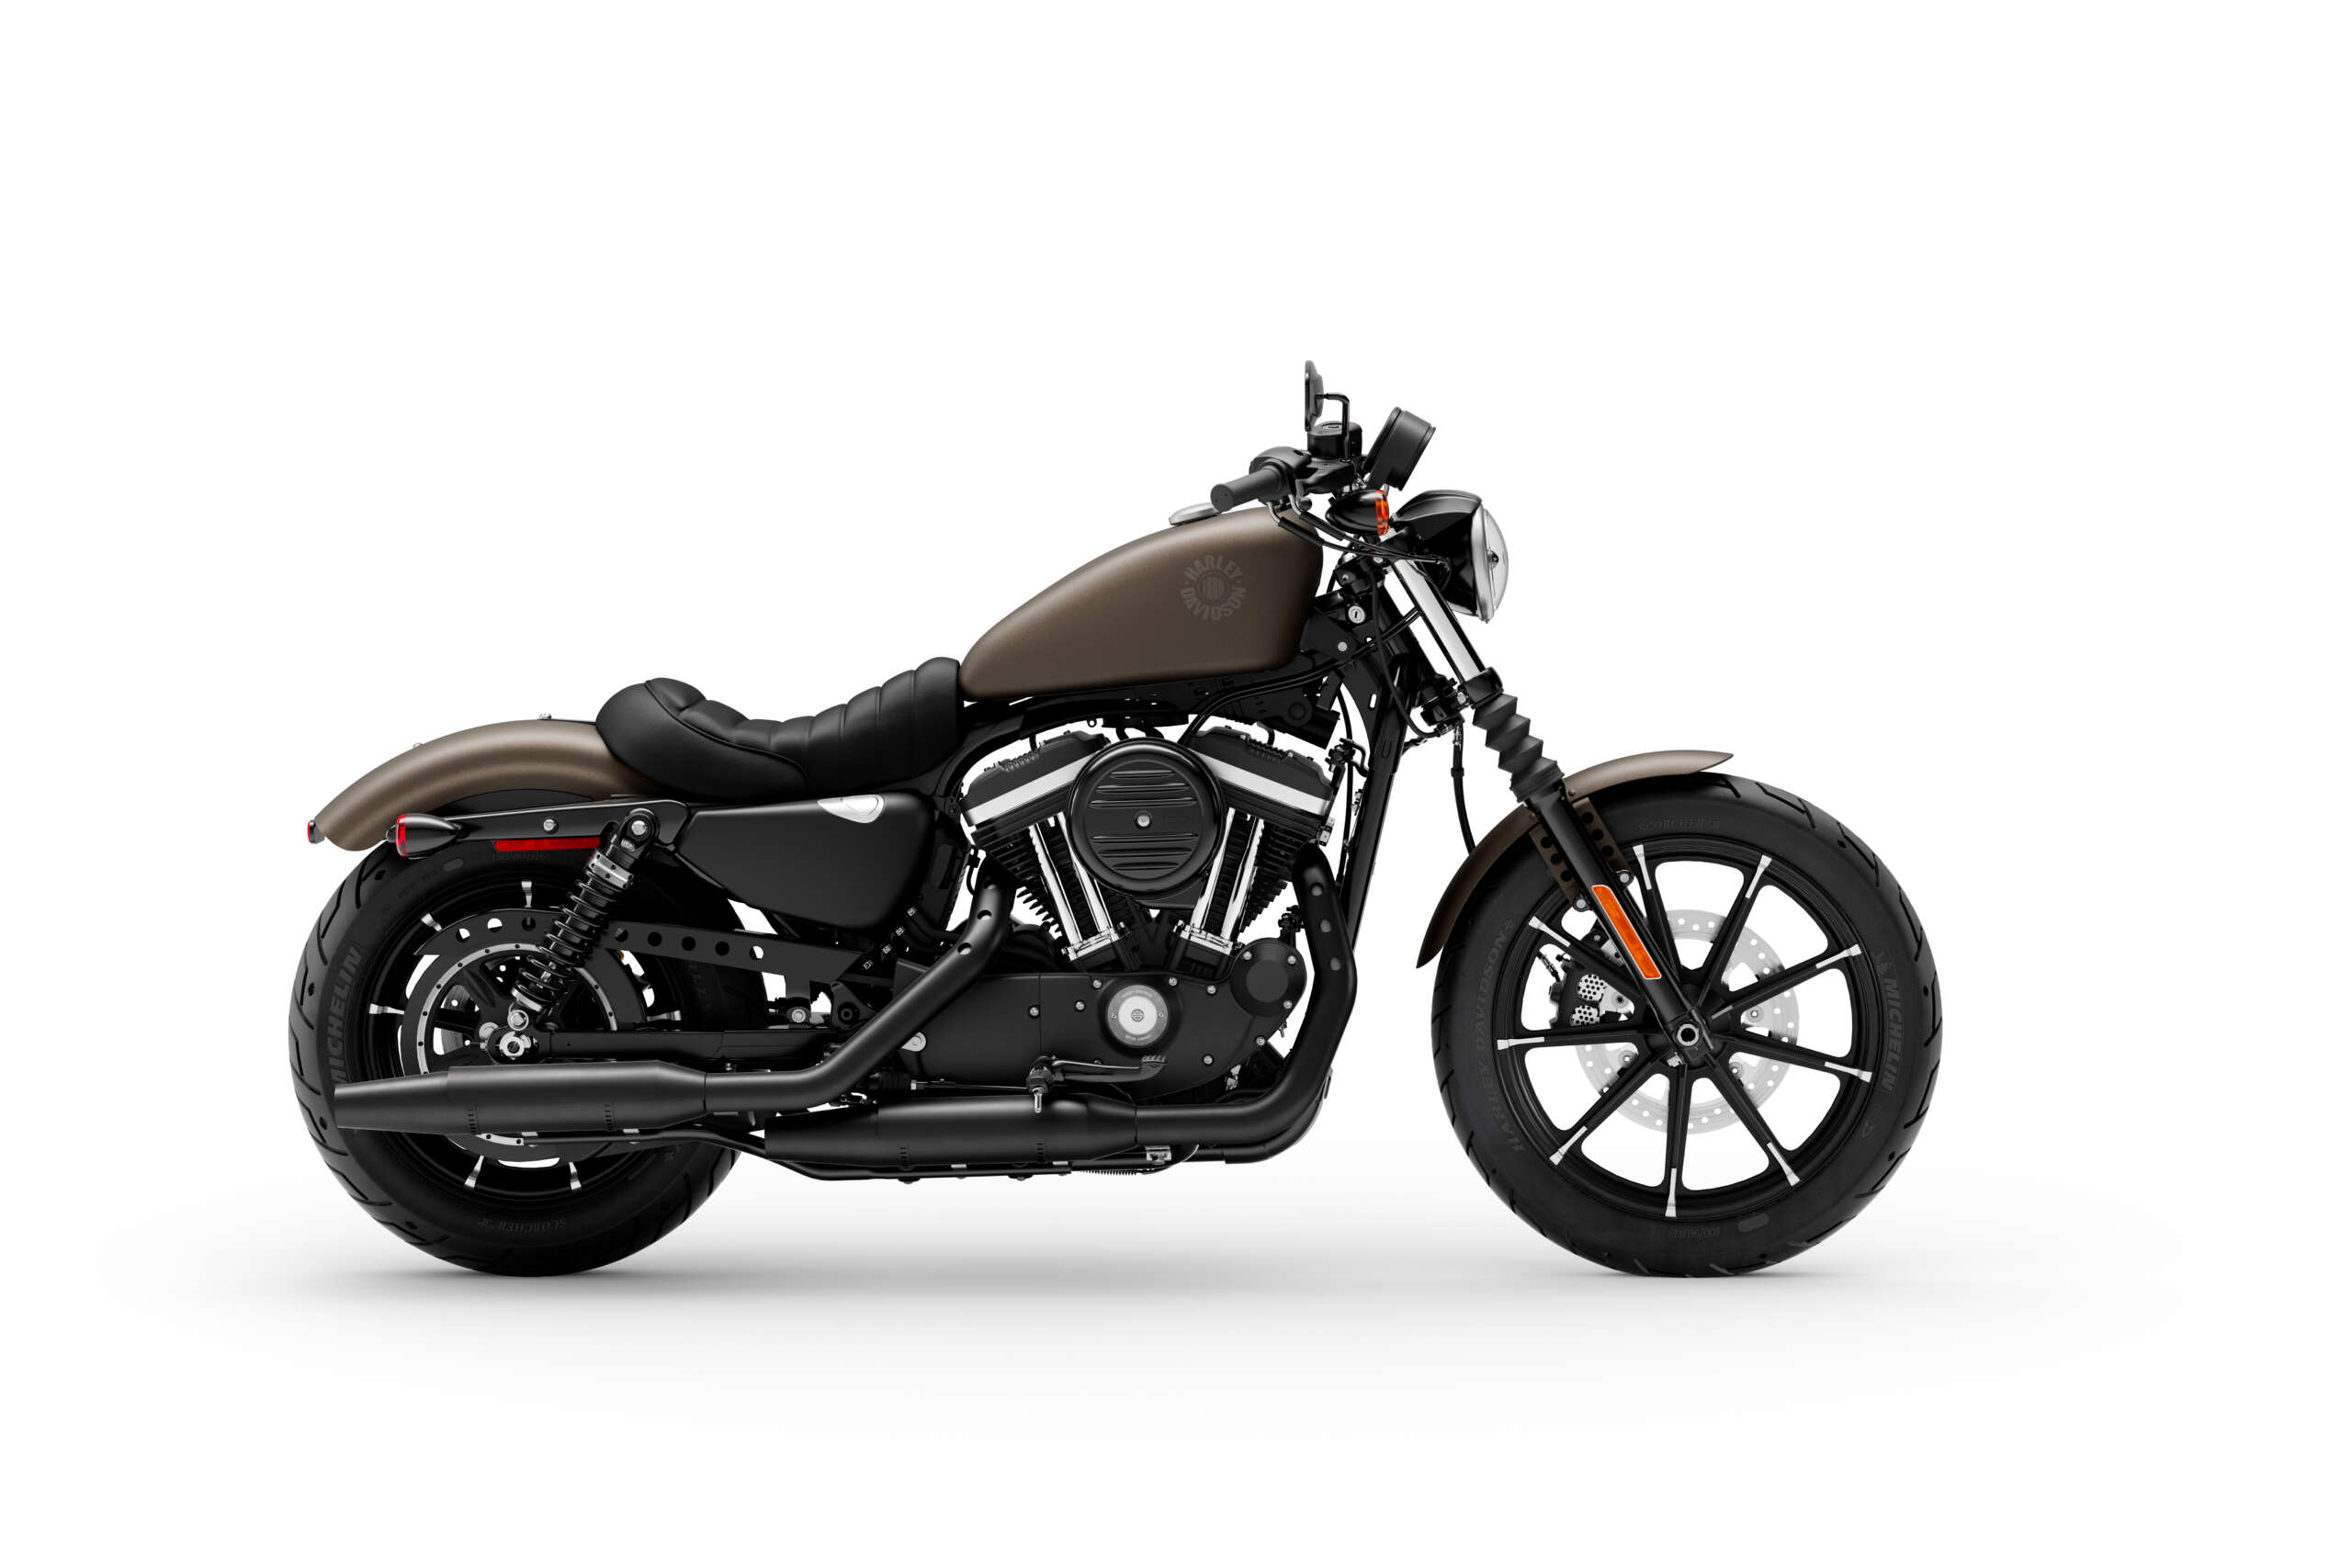 2021 HarleyDavidson Iron 883 Guide • Total Motorcycle